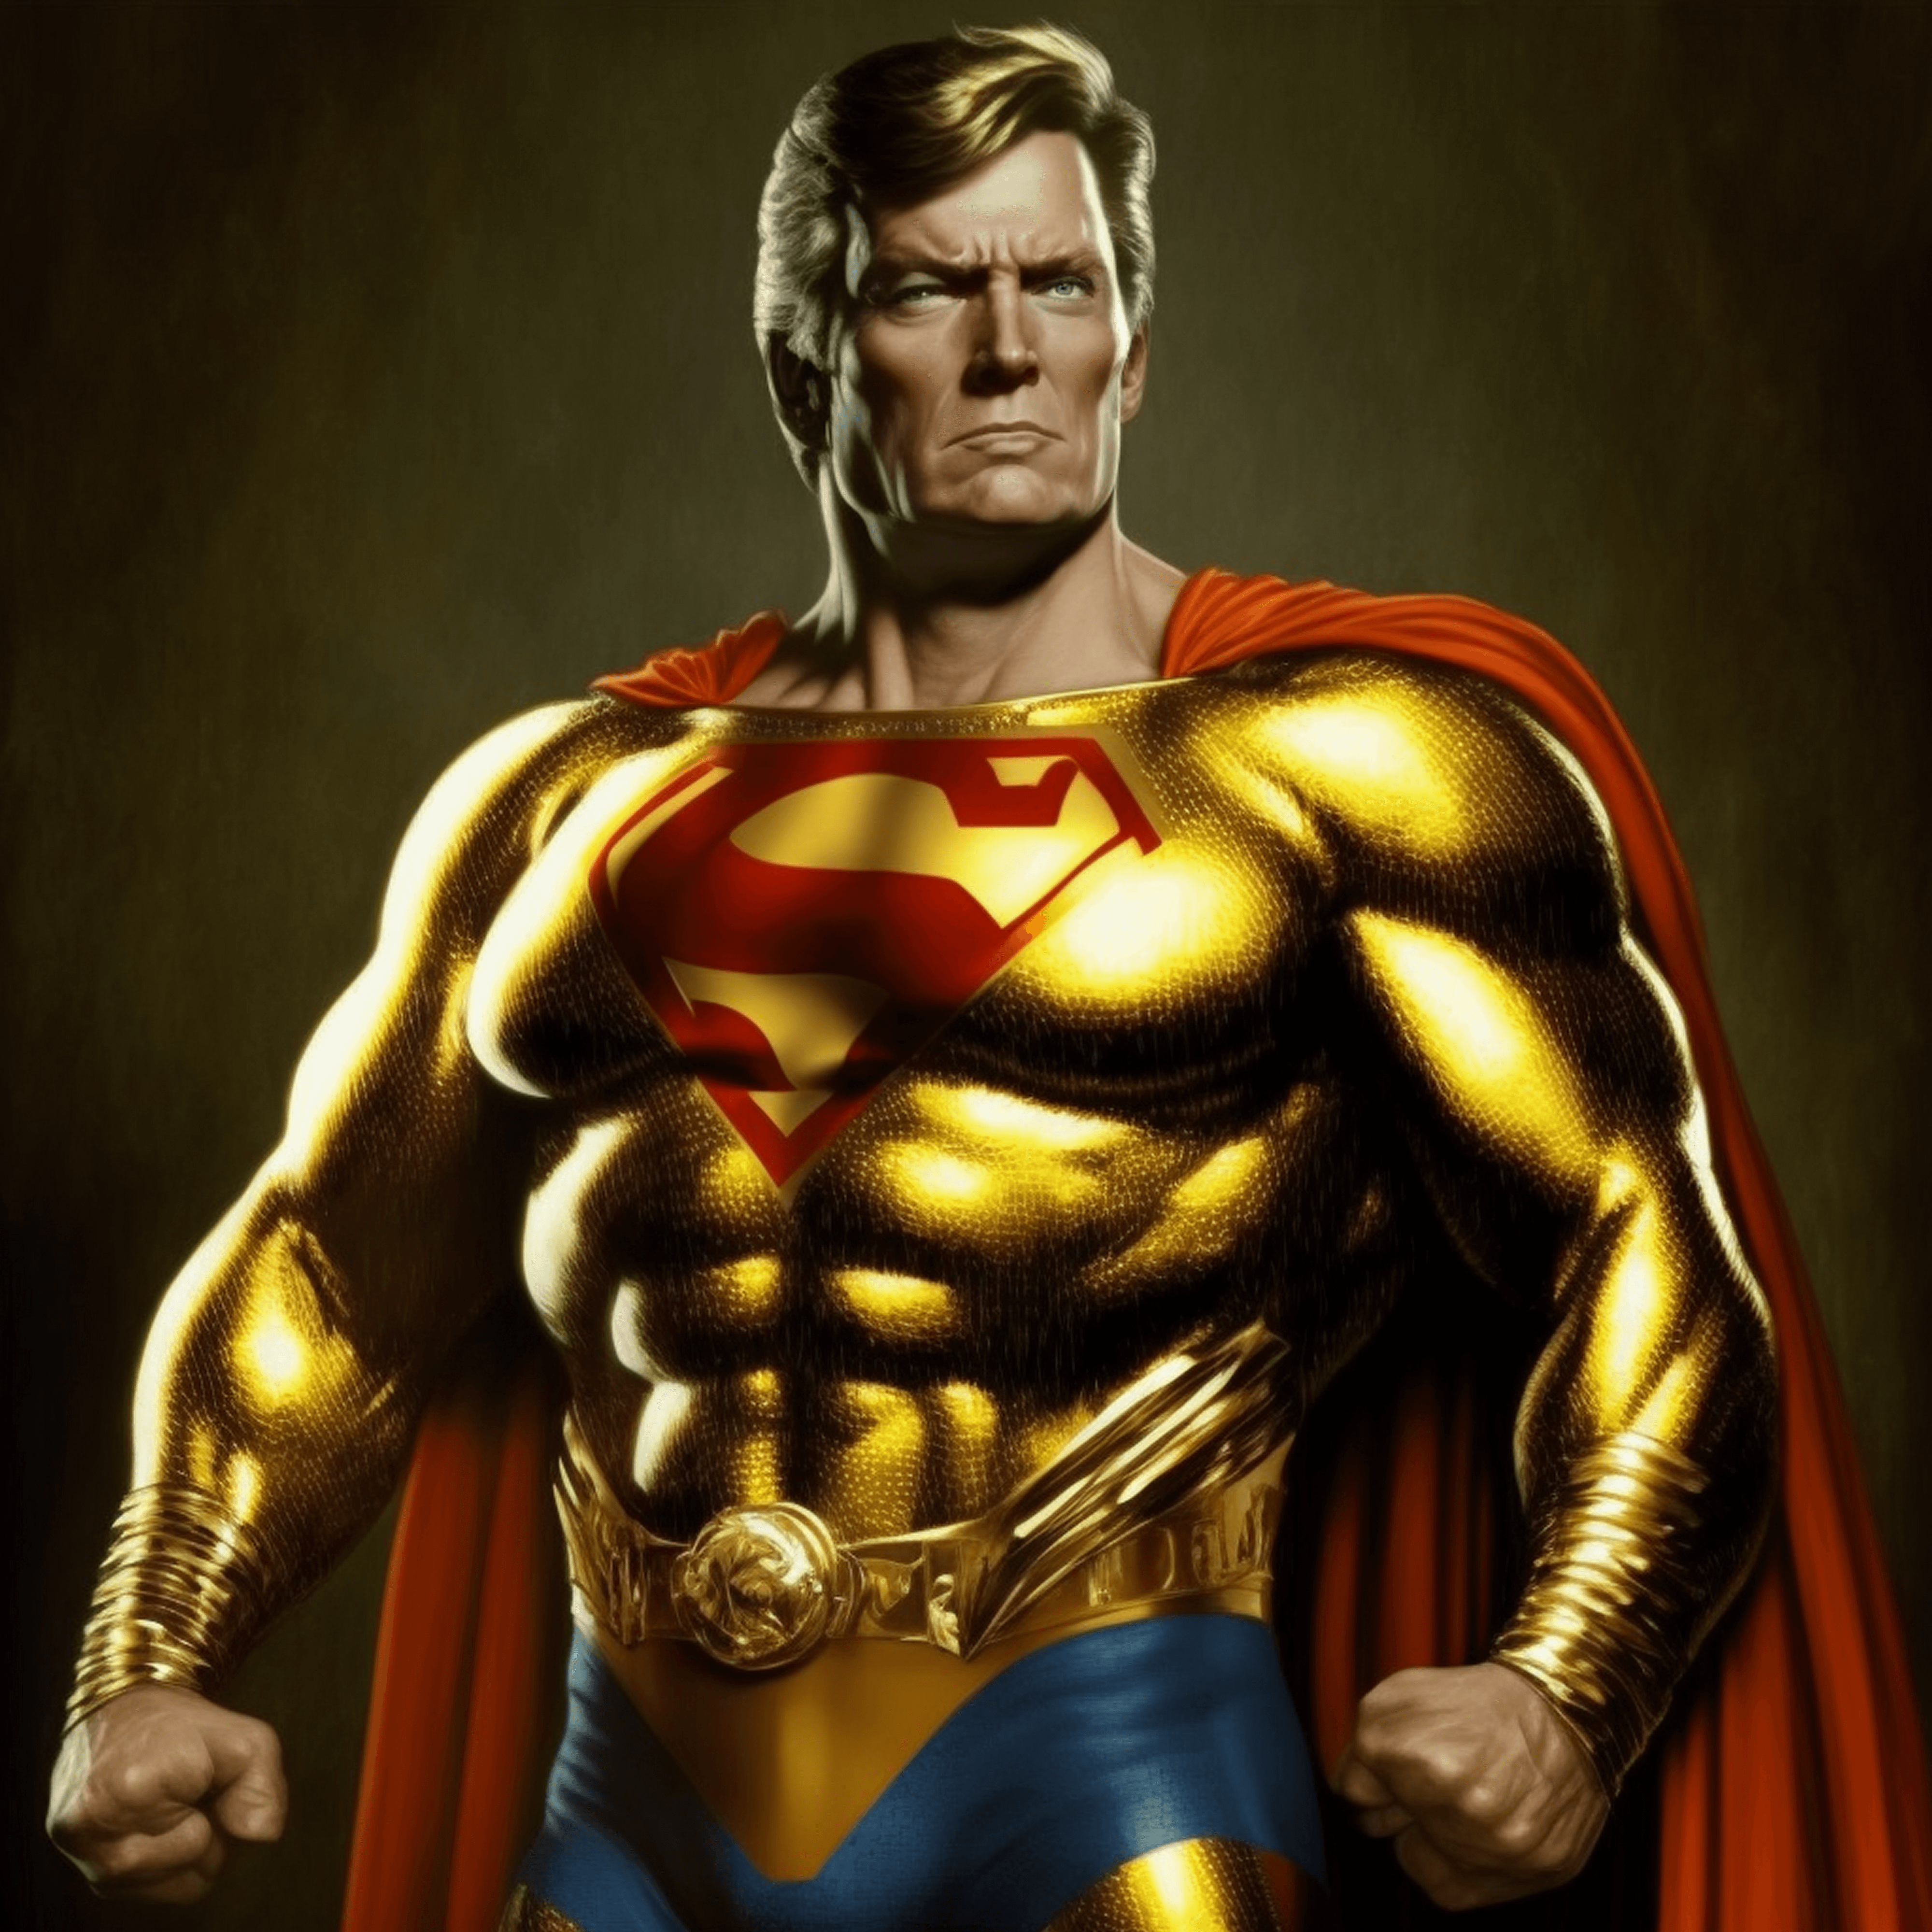 Superhero Gold No. 4 by Sollog